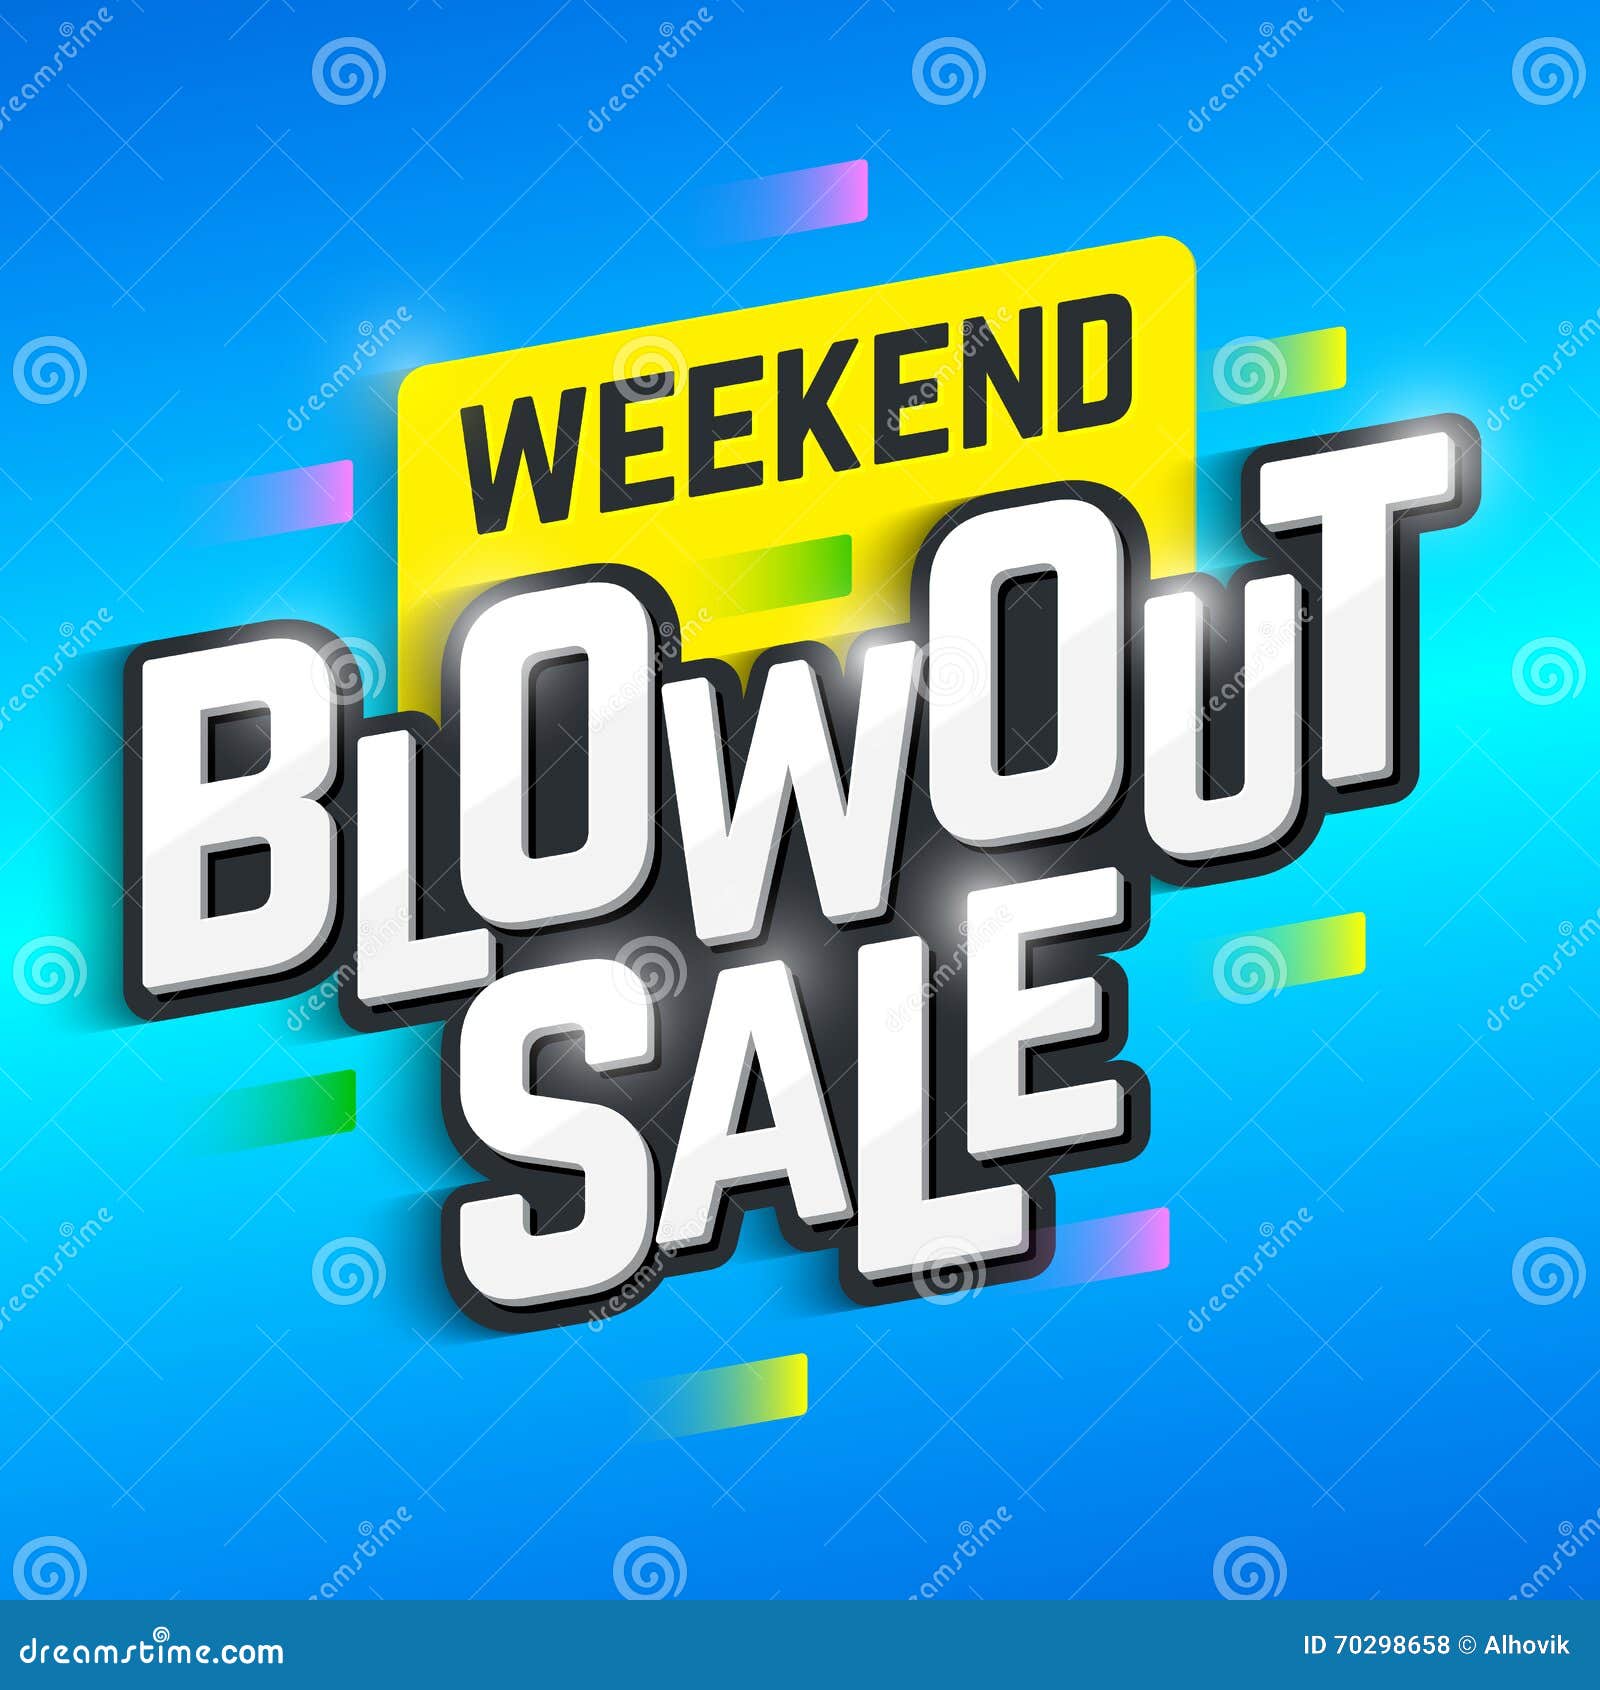 weekend blowout sale banner